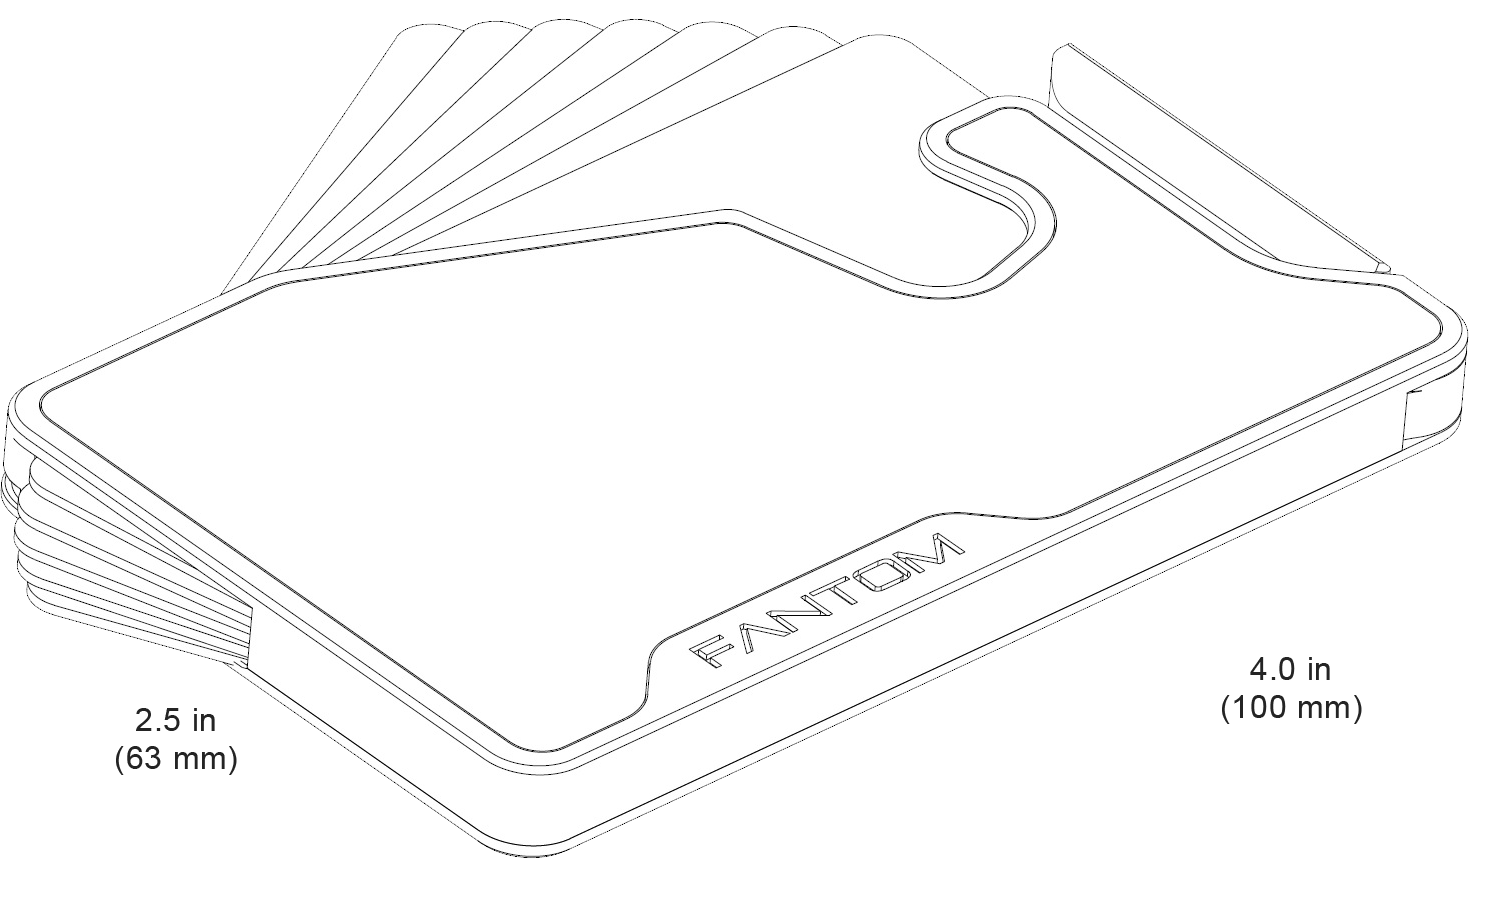 Fantom X - Key Holder - Fantom Wallet